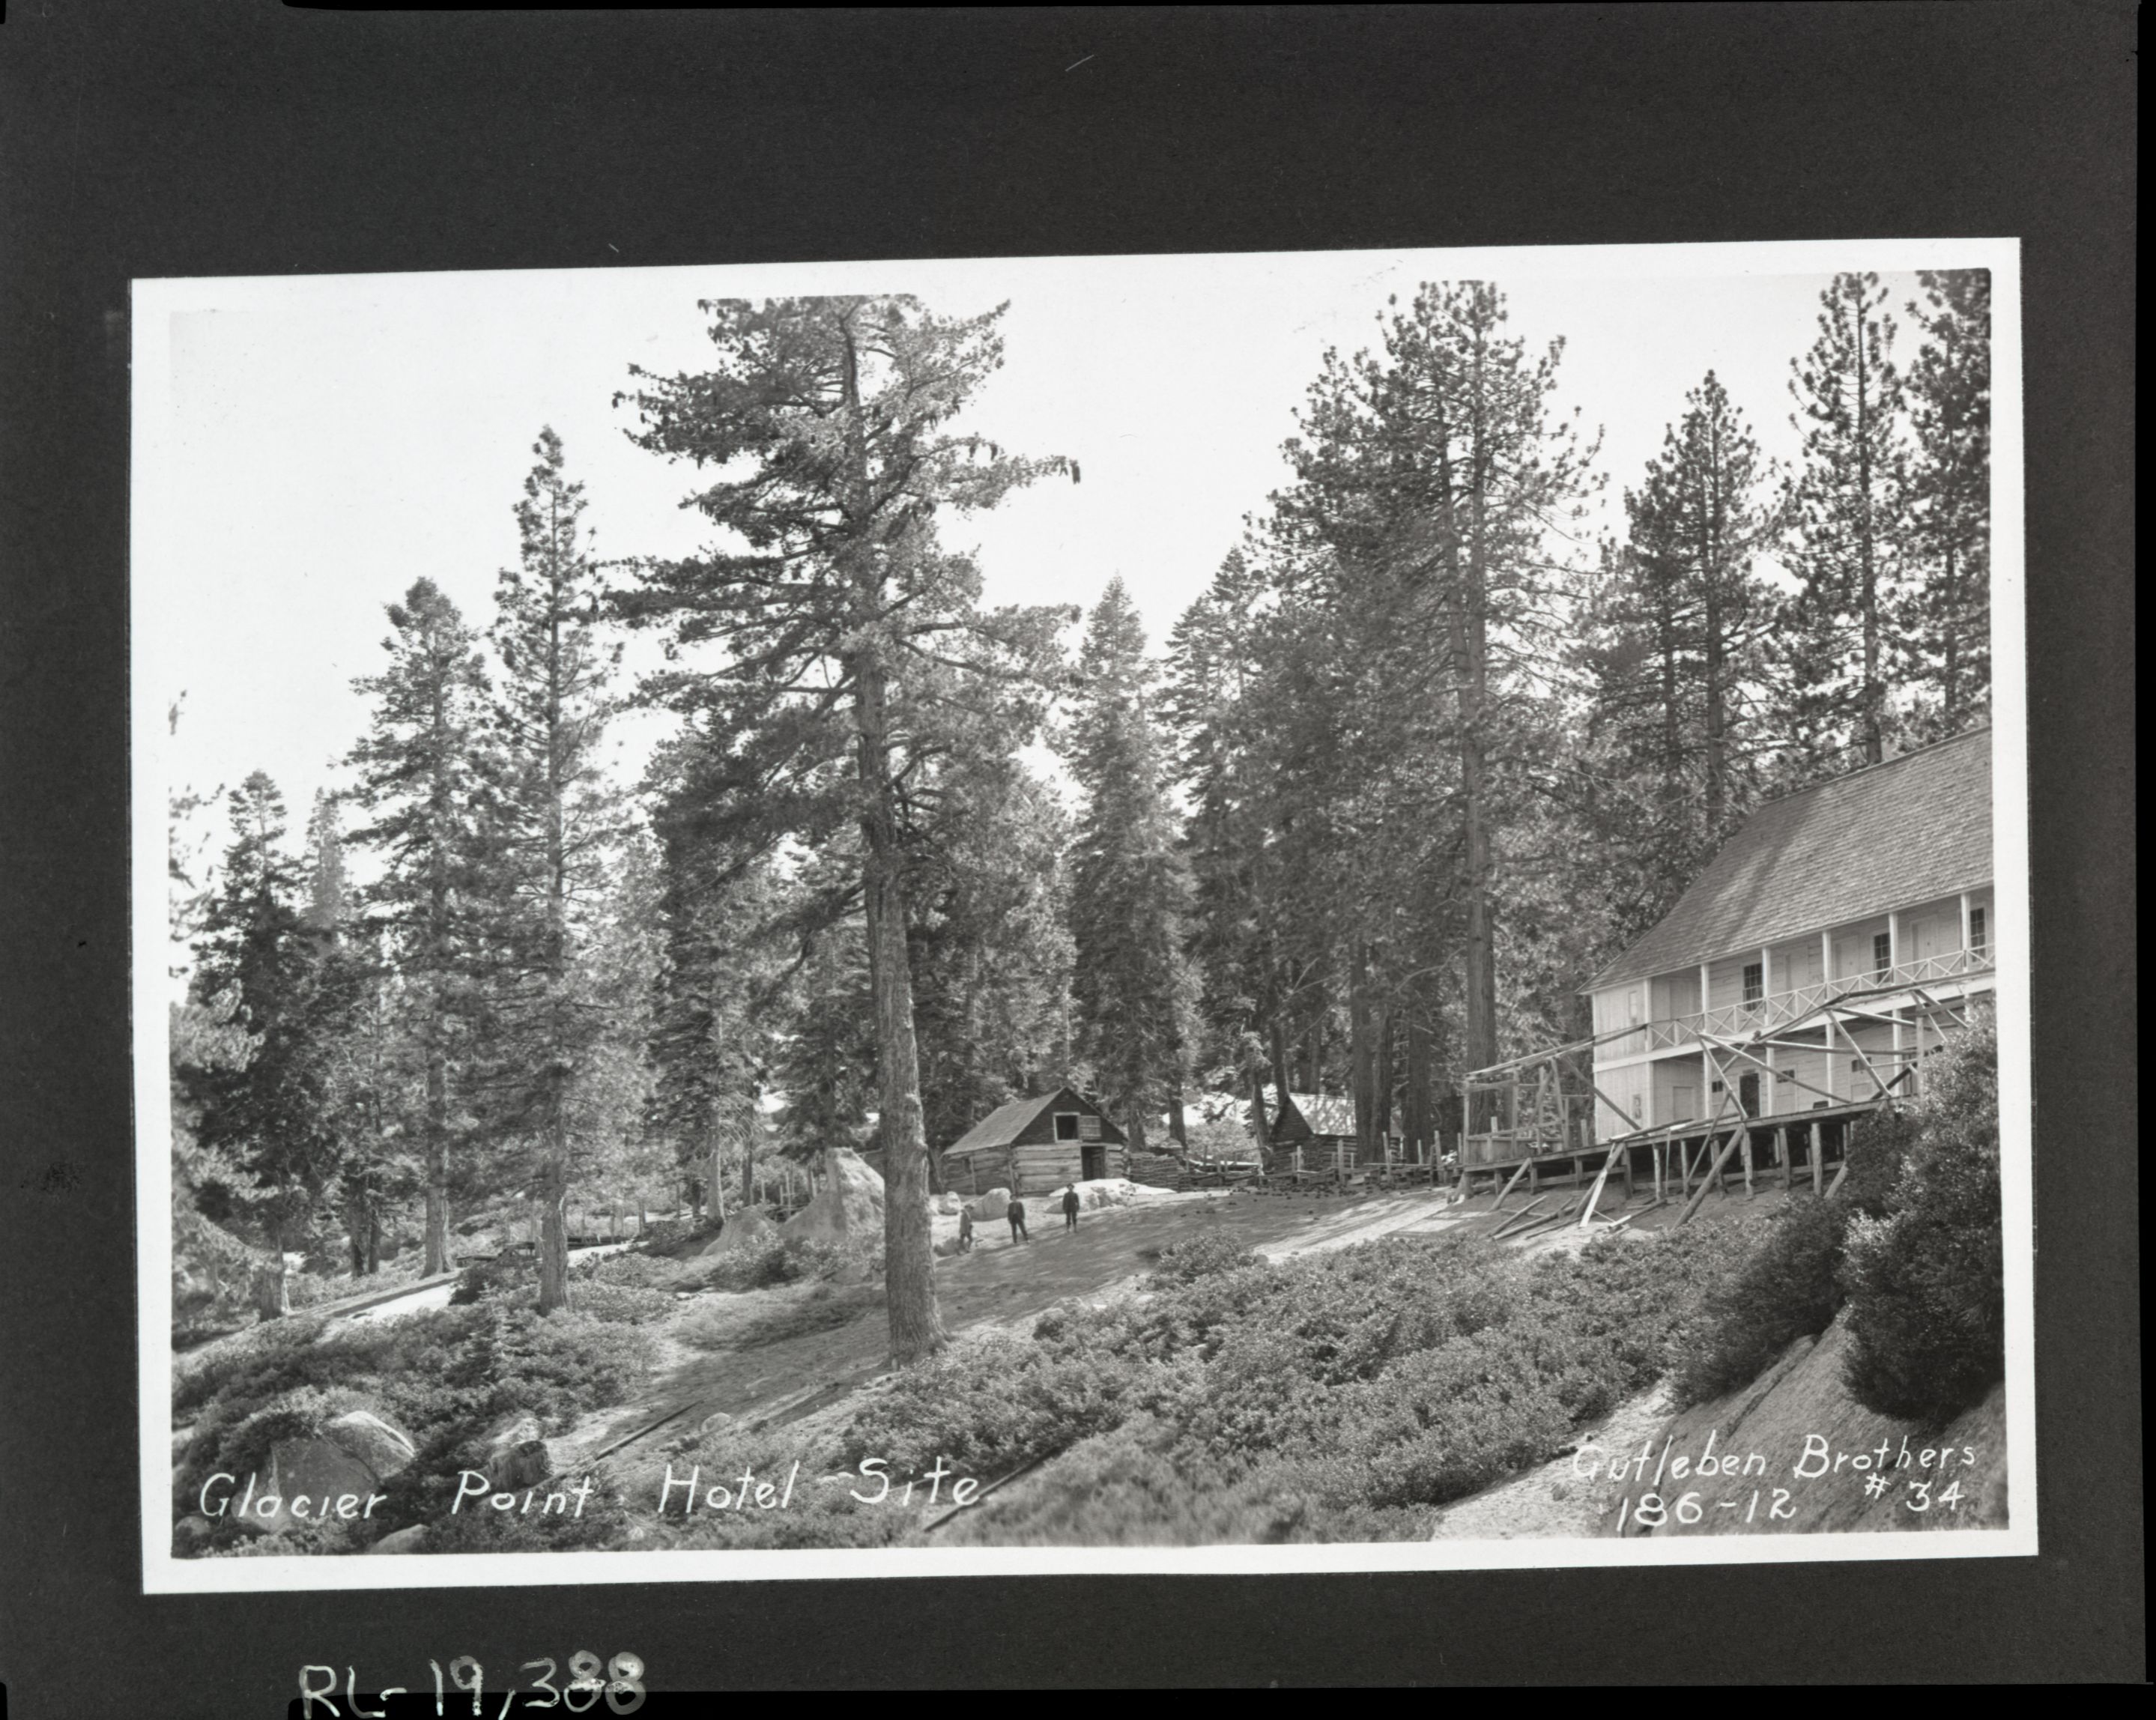 Glacier Point Hotel site. Copied from Gutleben brothers photo album (YOSE 14339).